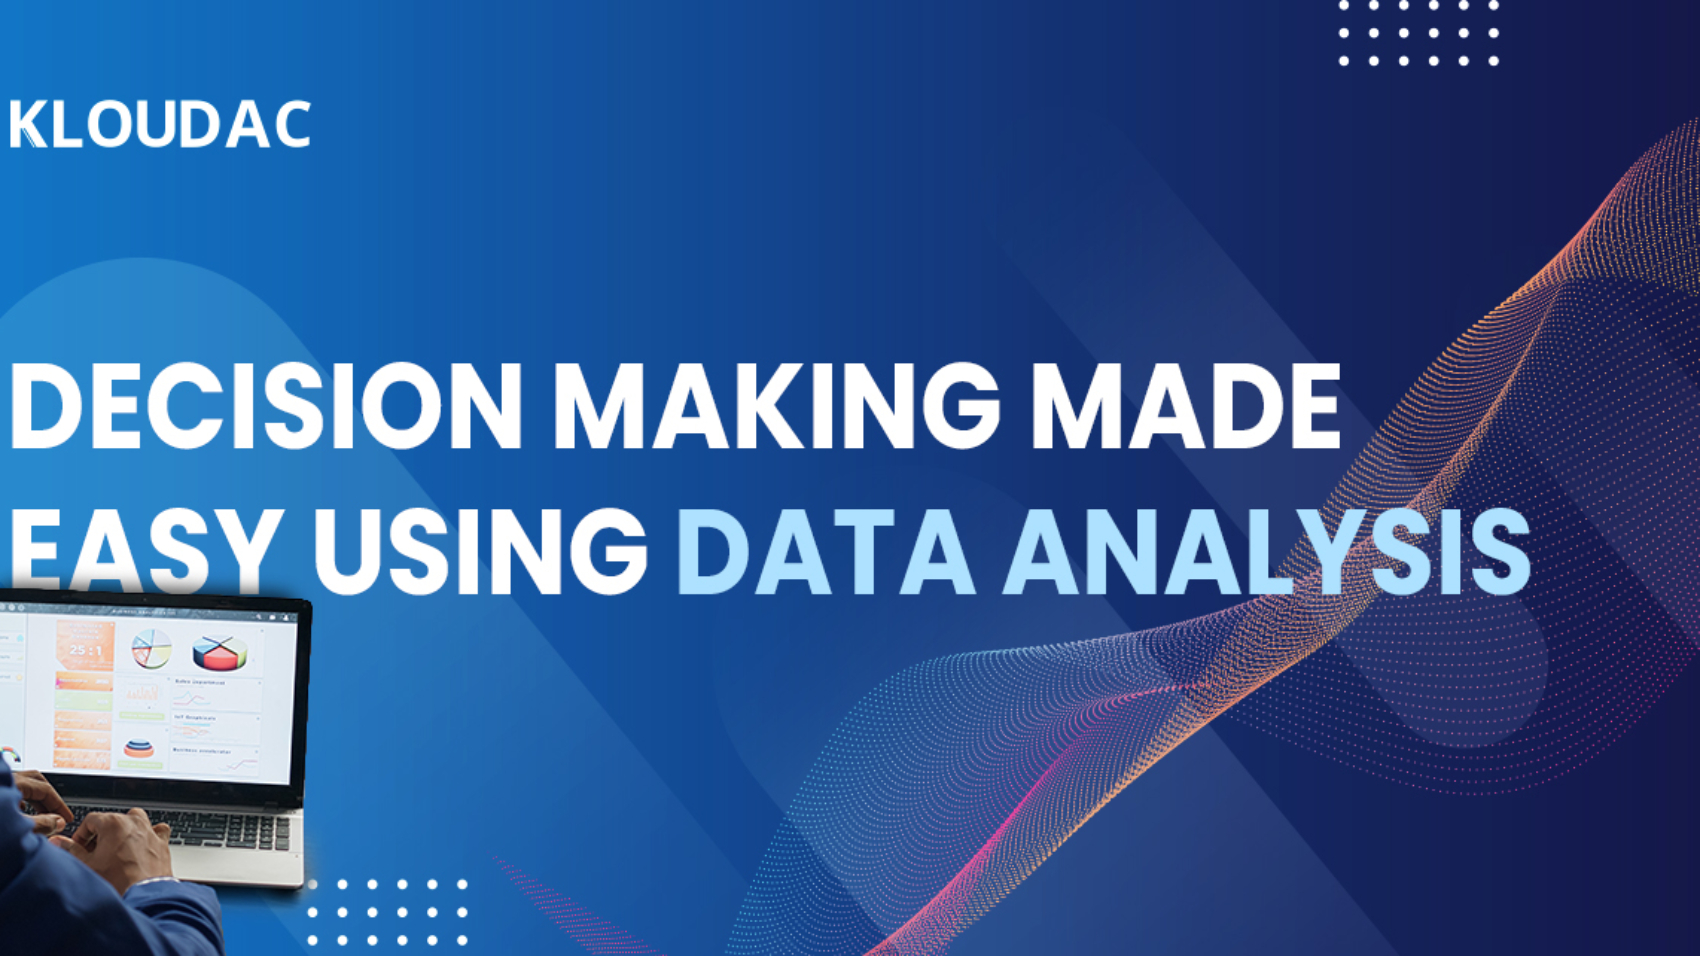 Decision making made easy using data analysis